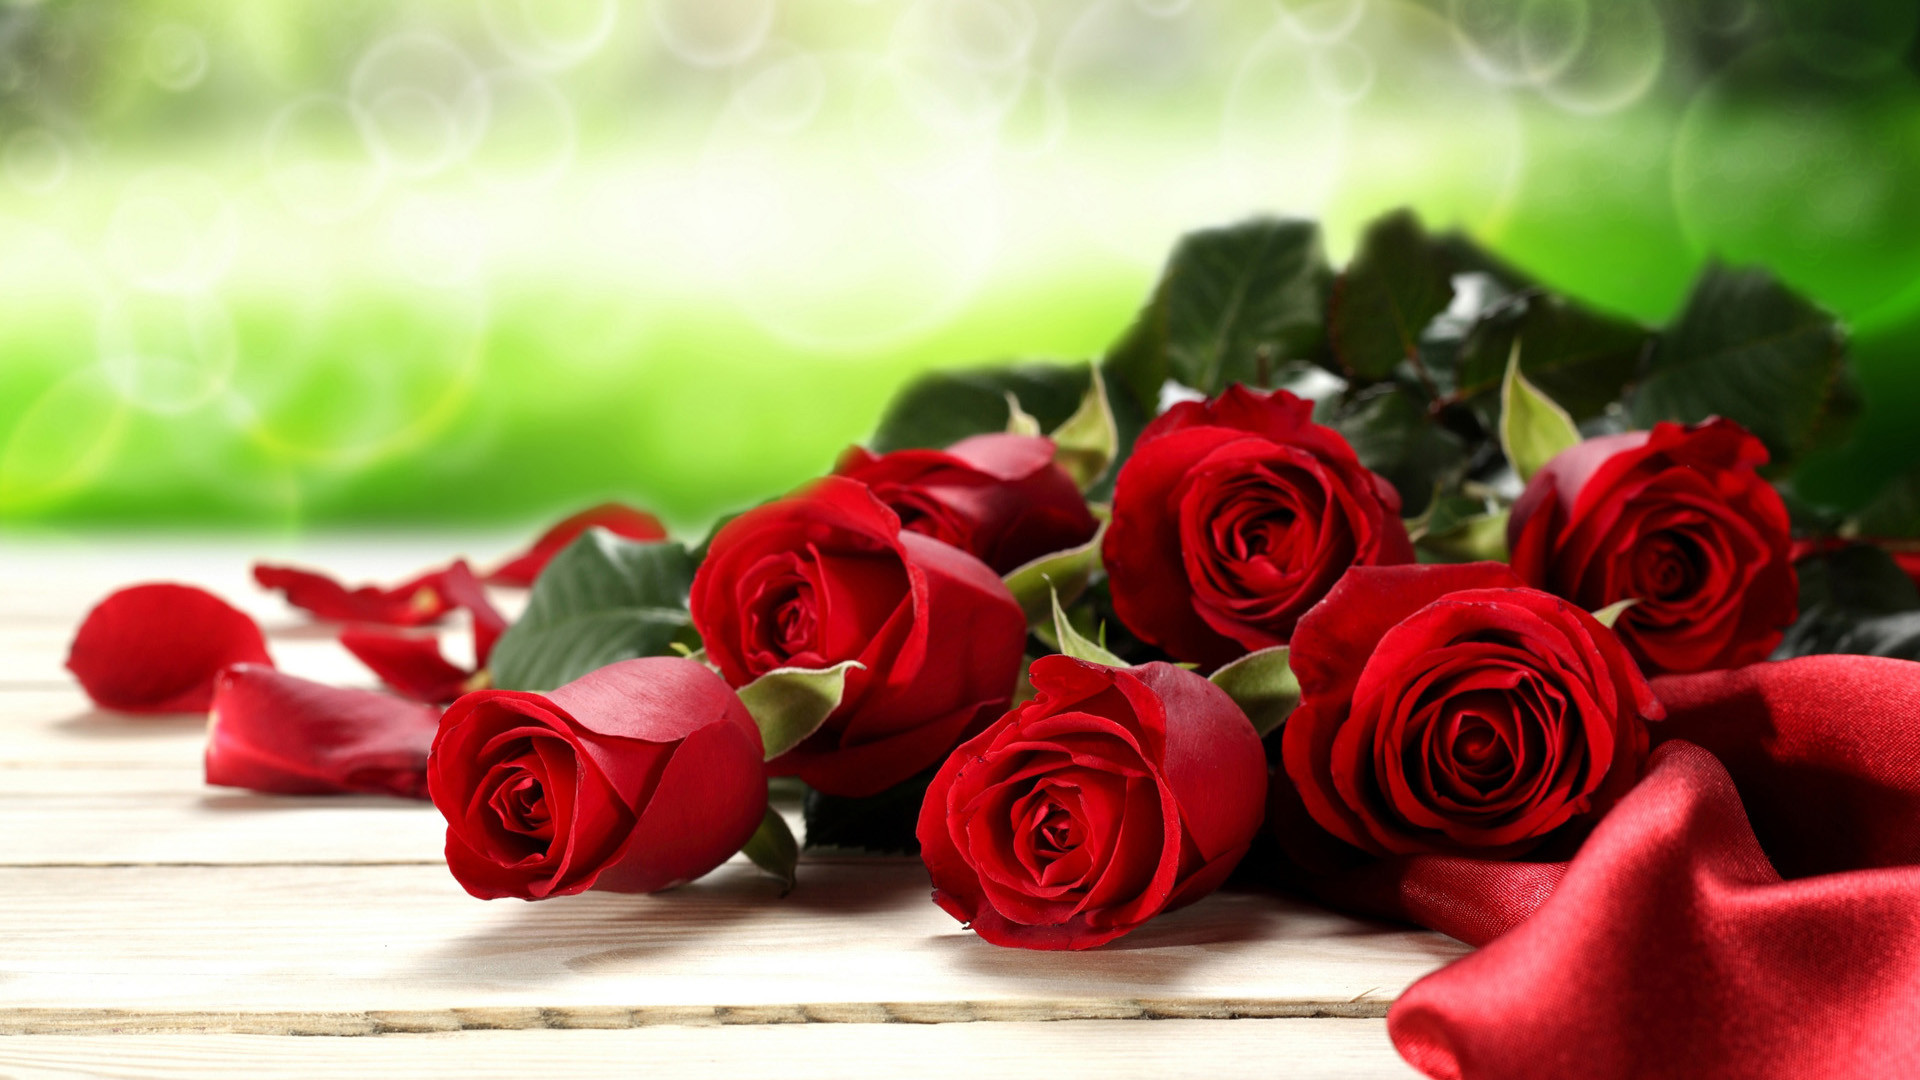 HD wallpaper: Red Roses, Dark background, Rose flowers, 4K | Wallpaper Flare